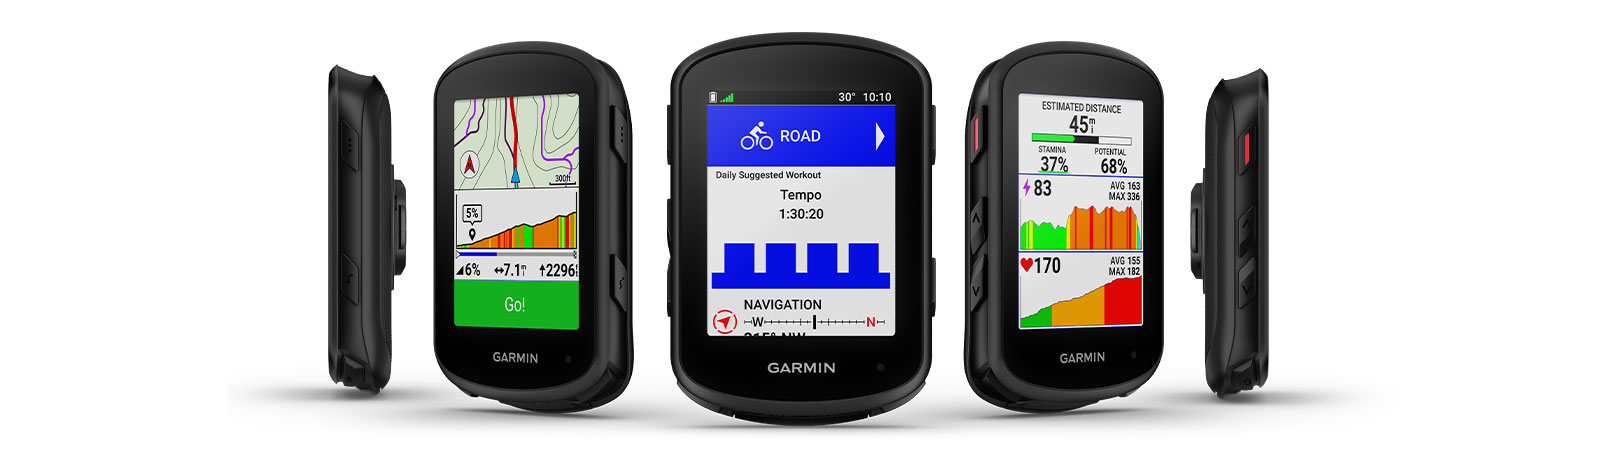 Bike Tech: Riding The Garmin Edge 840 - Bicycling Australia